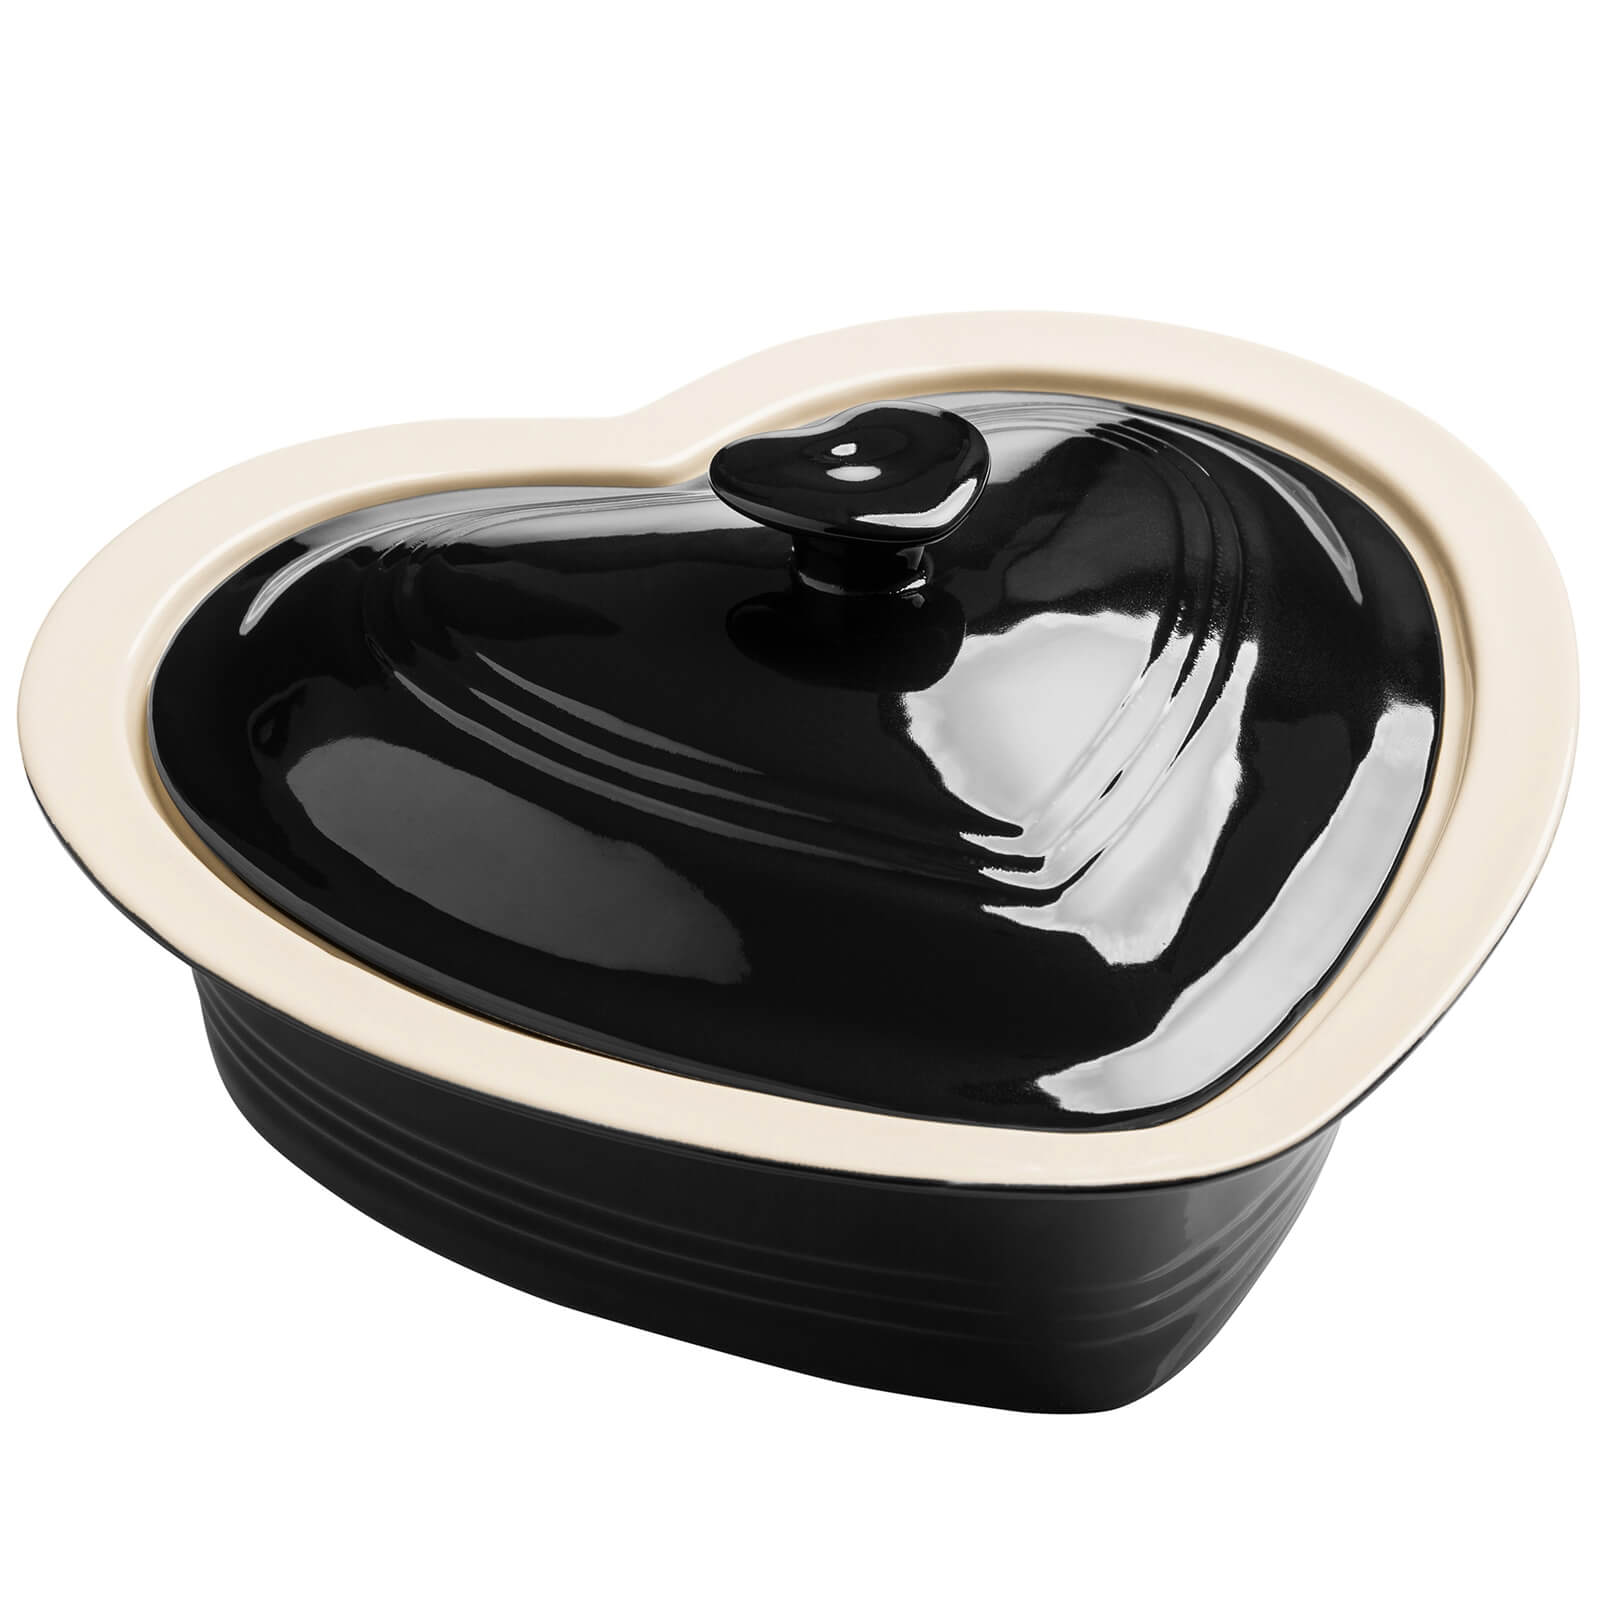 Amour Heart Shape Casserole Dish - Black